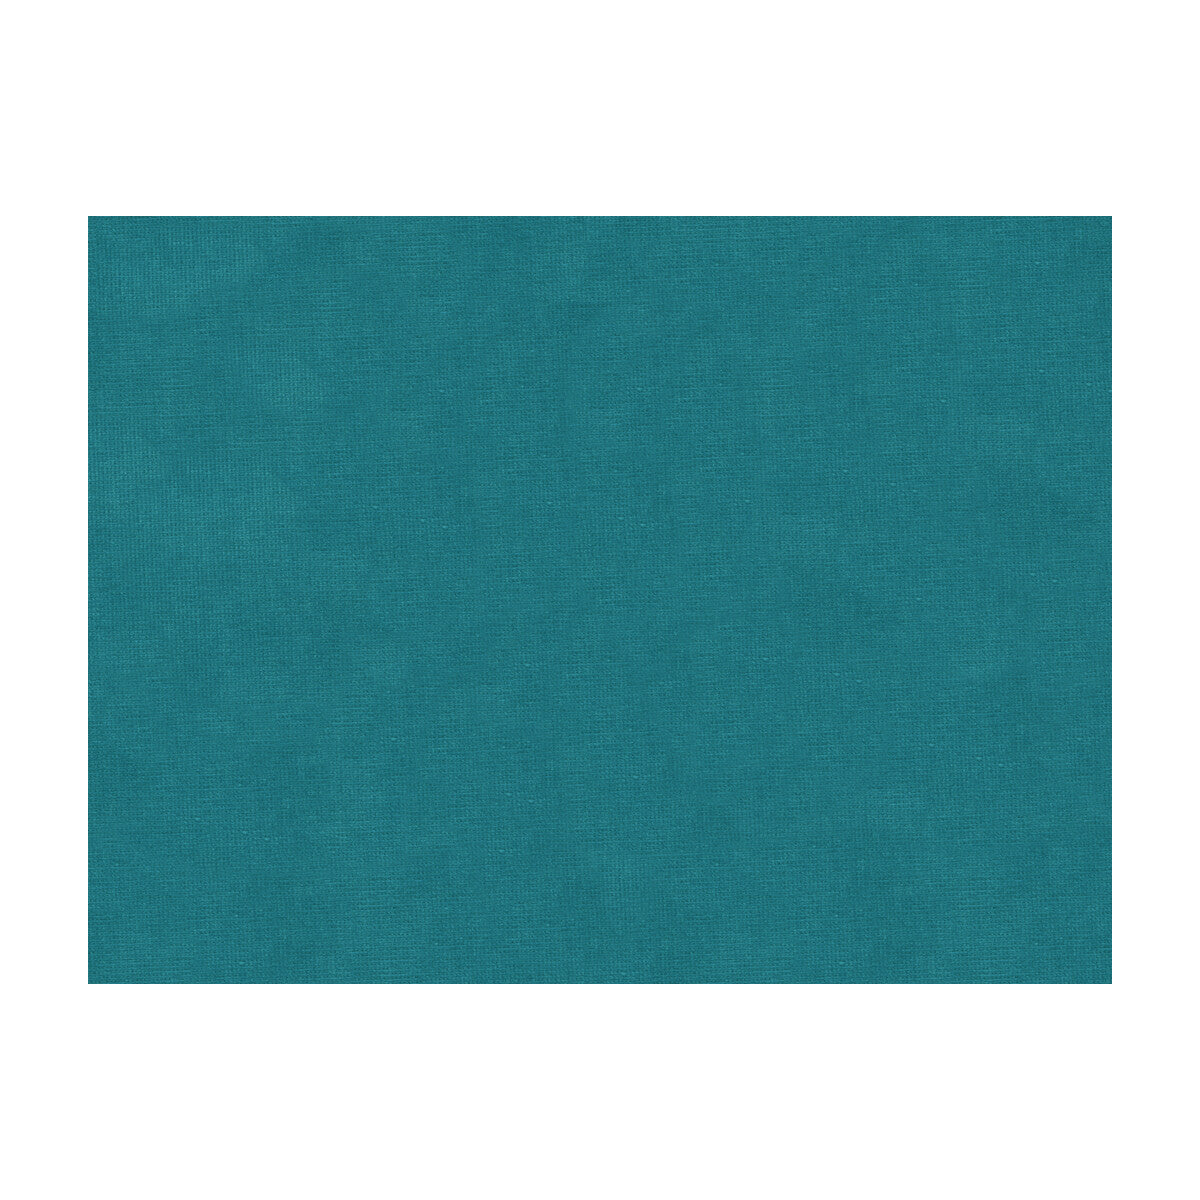 Charmant Velvet fabric in cerulean color - pattern 8013150.313.0 - by Brunschwig &amp; Fils